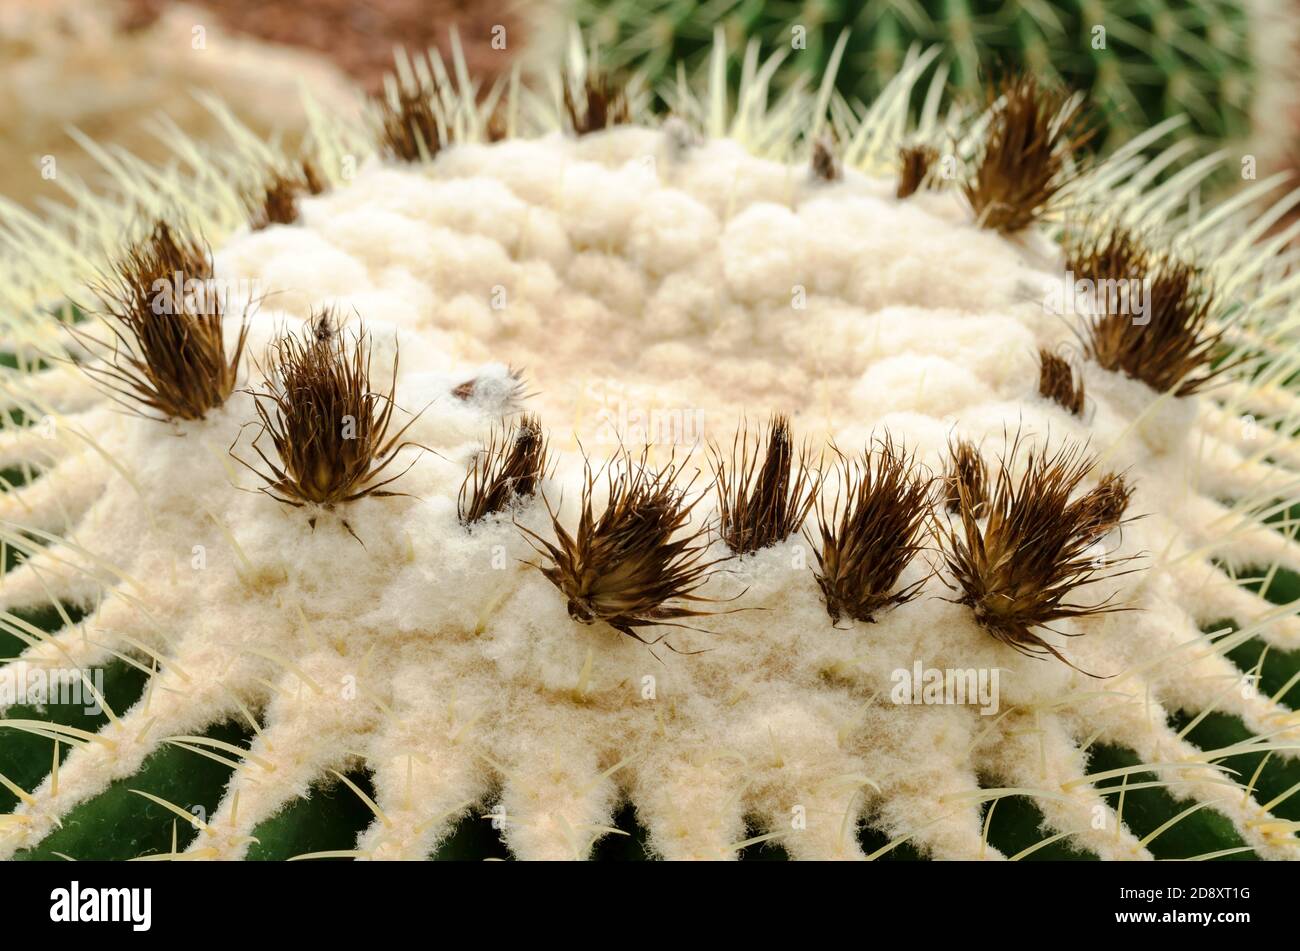 Golden Barrel Cactus plant Stock Photo